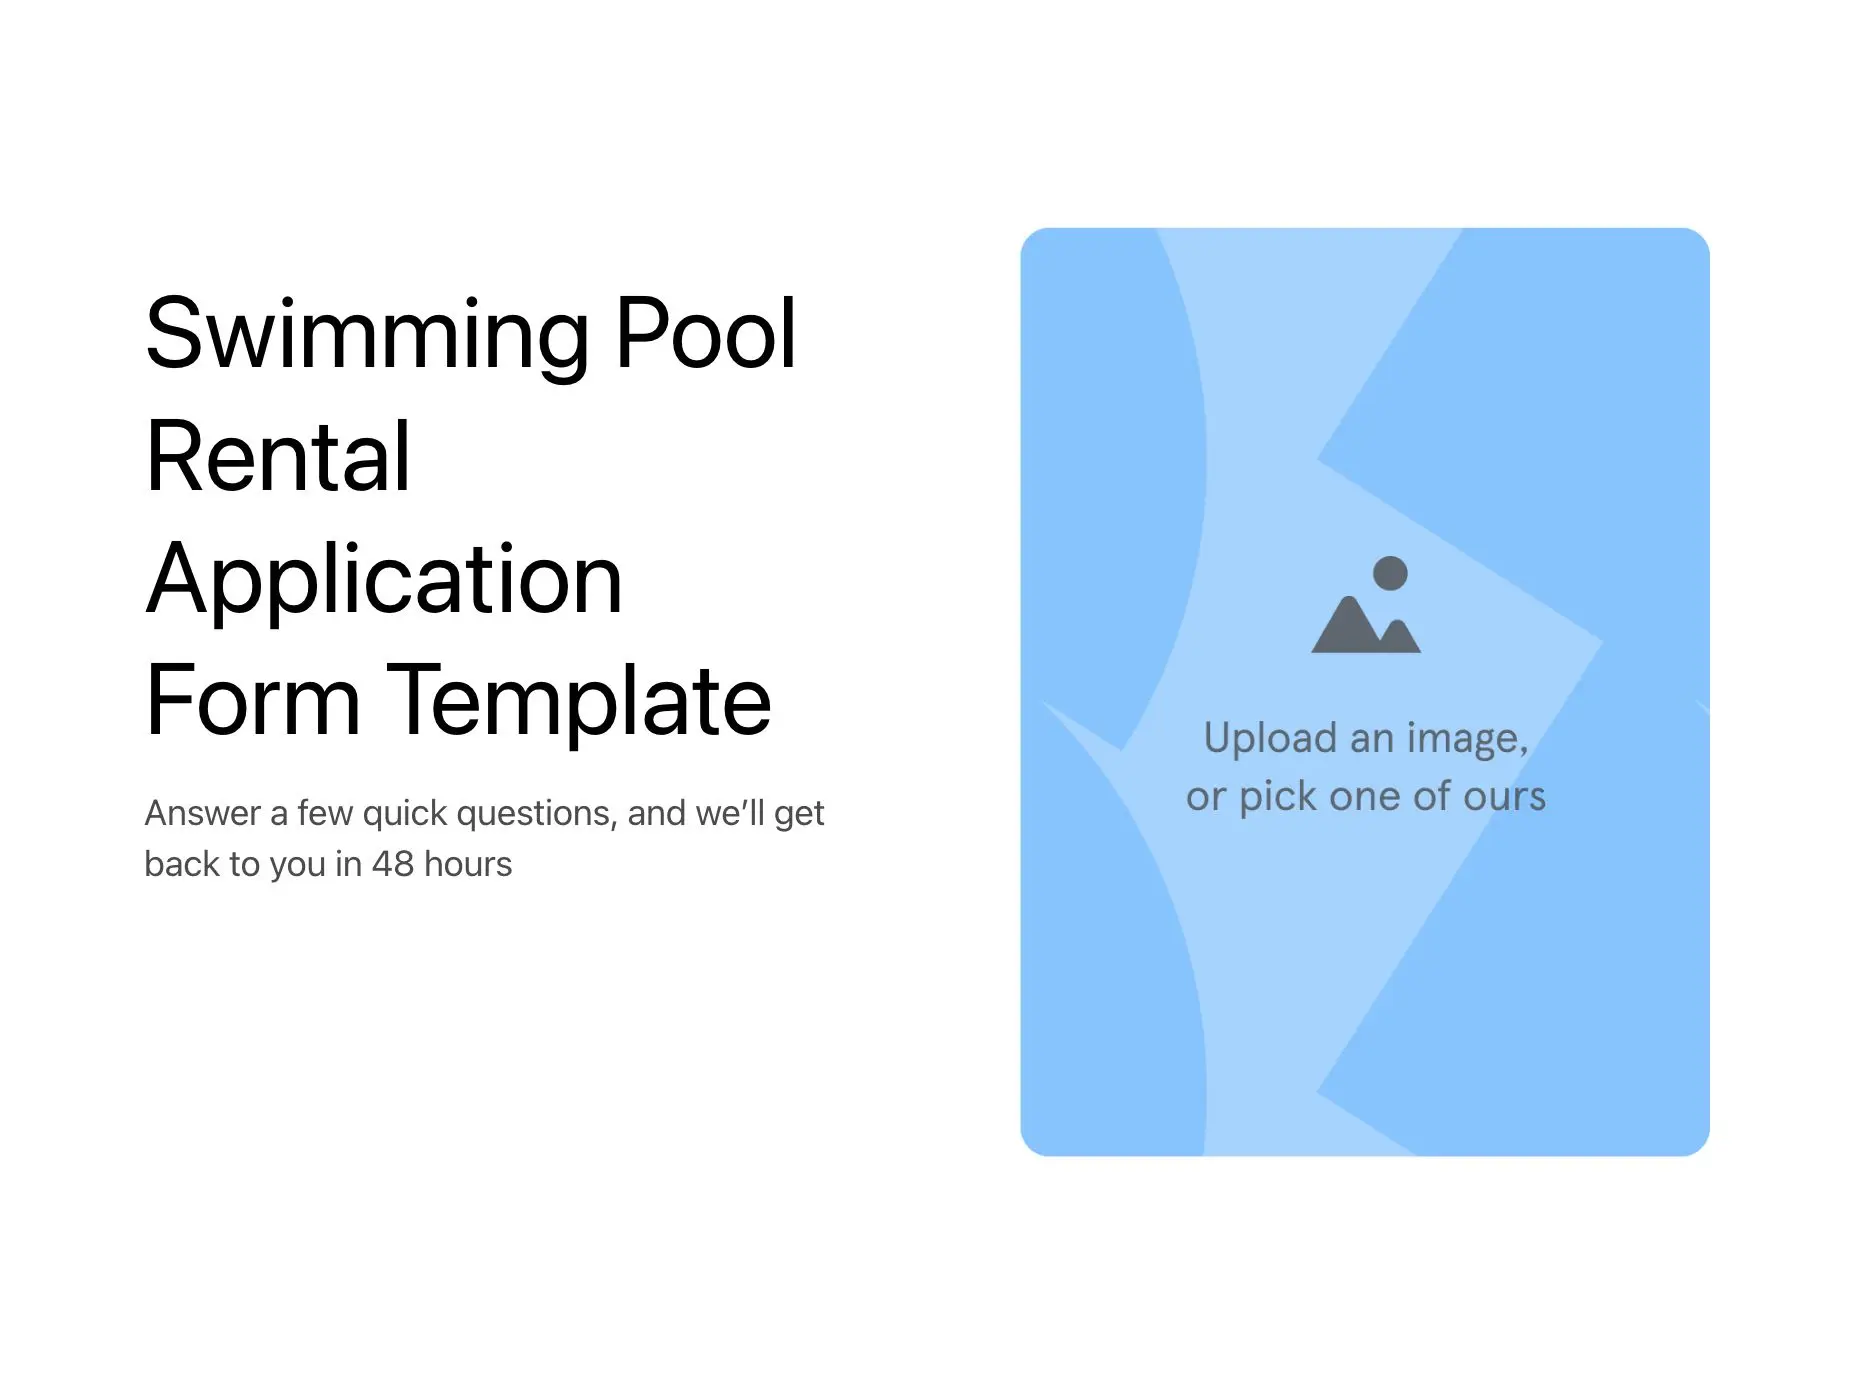 Swimming Pool Rental Application Form Template Hero